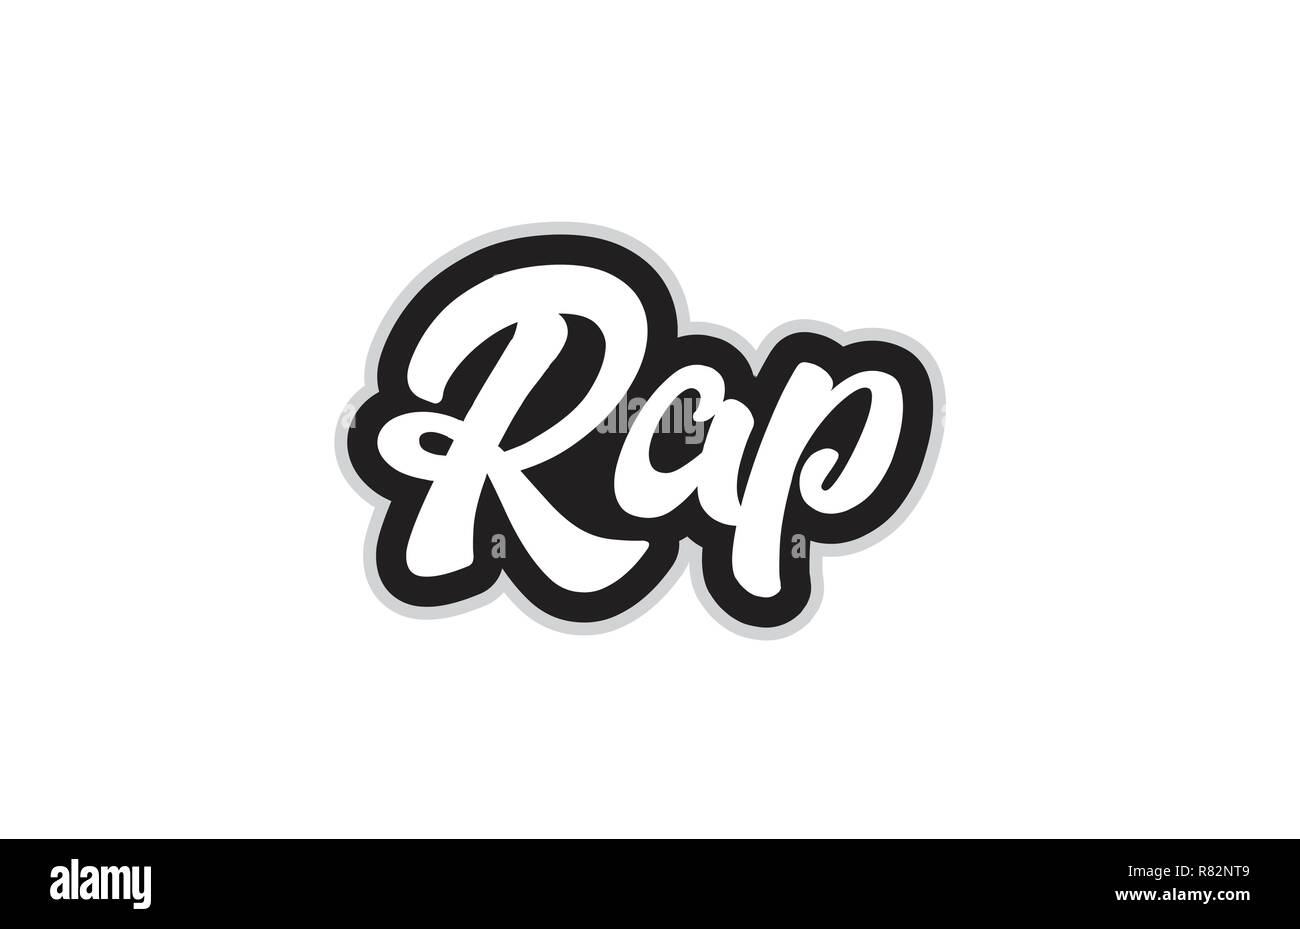 Rap logo Cut Out Stock Images & Pictures - Alamy